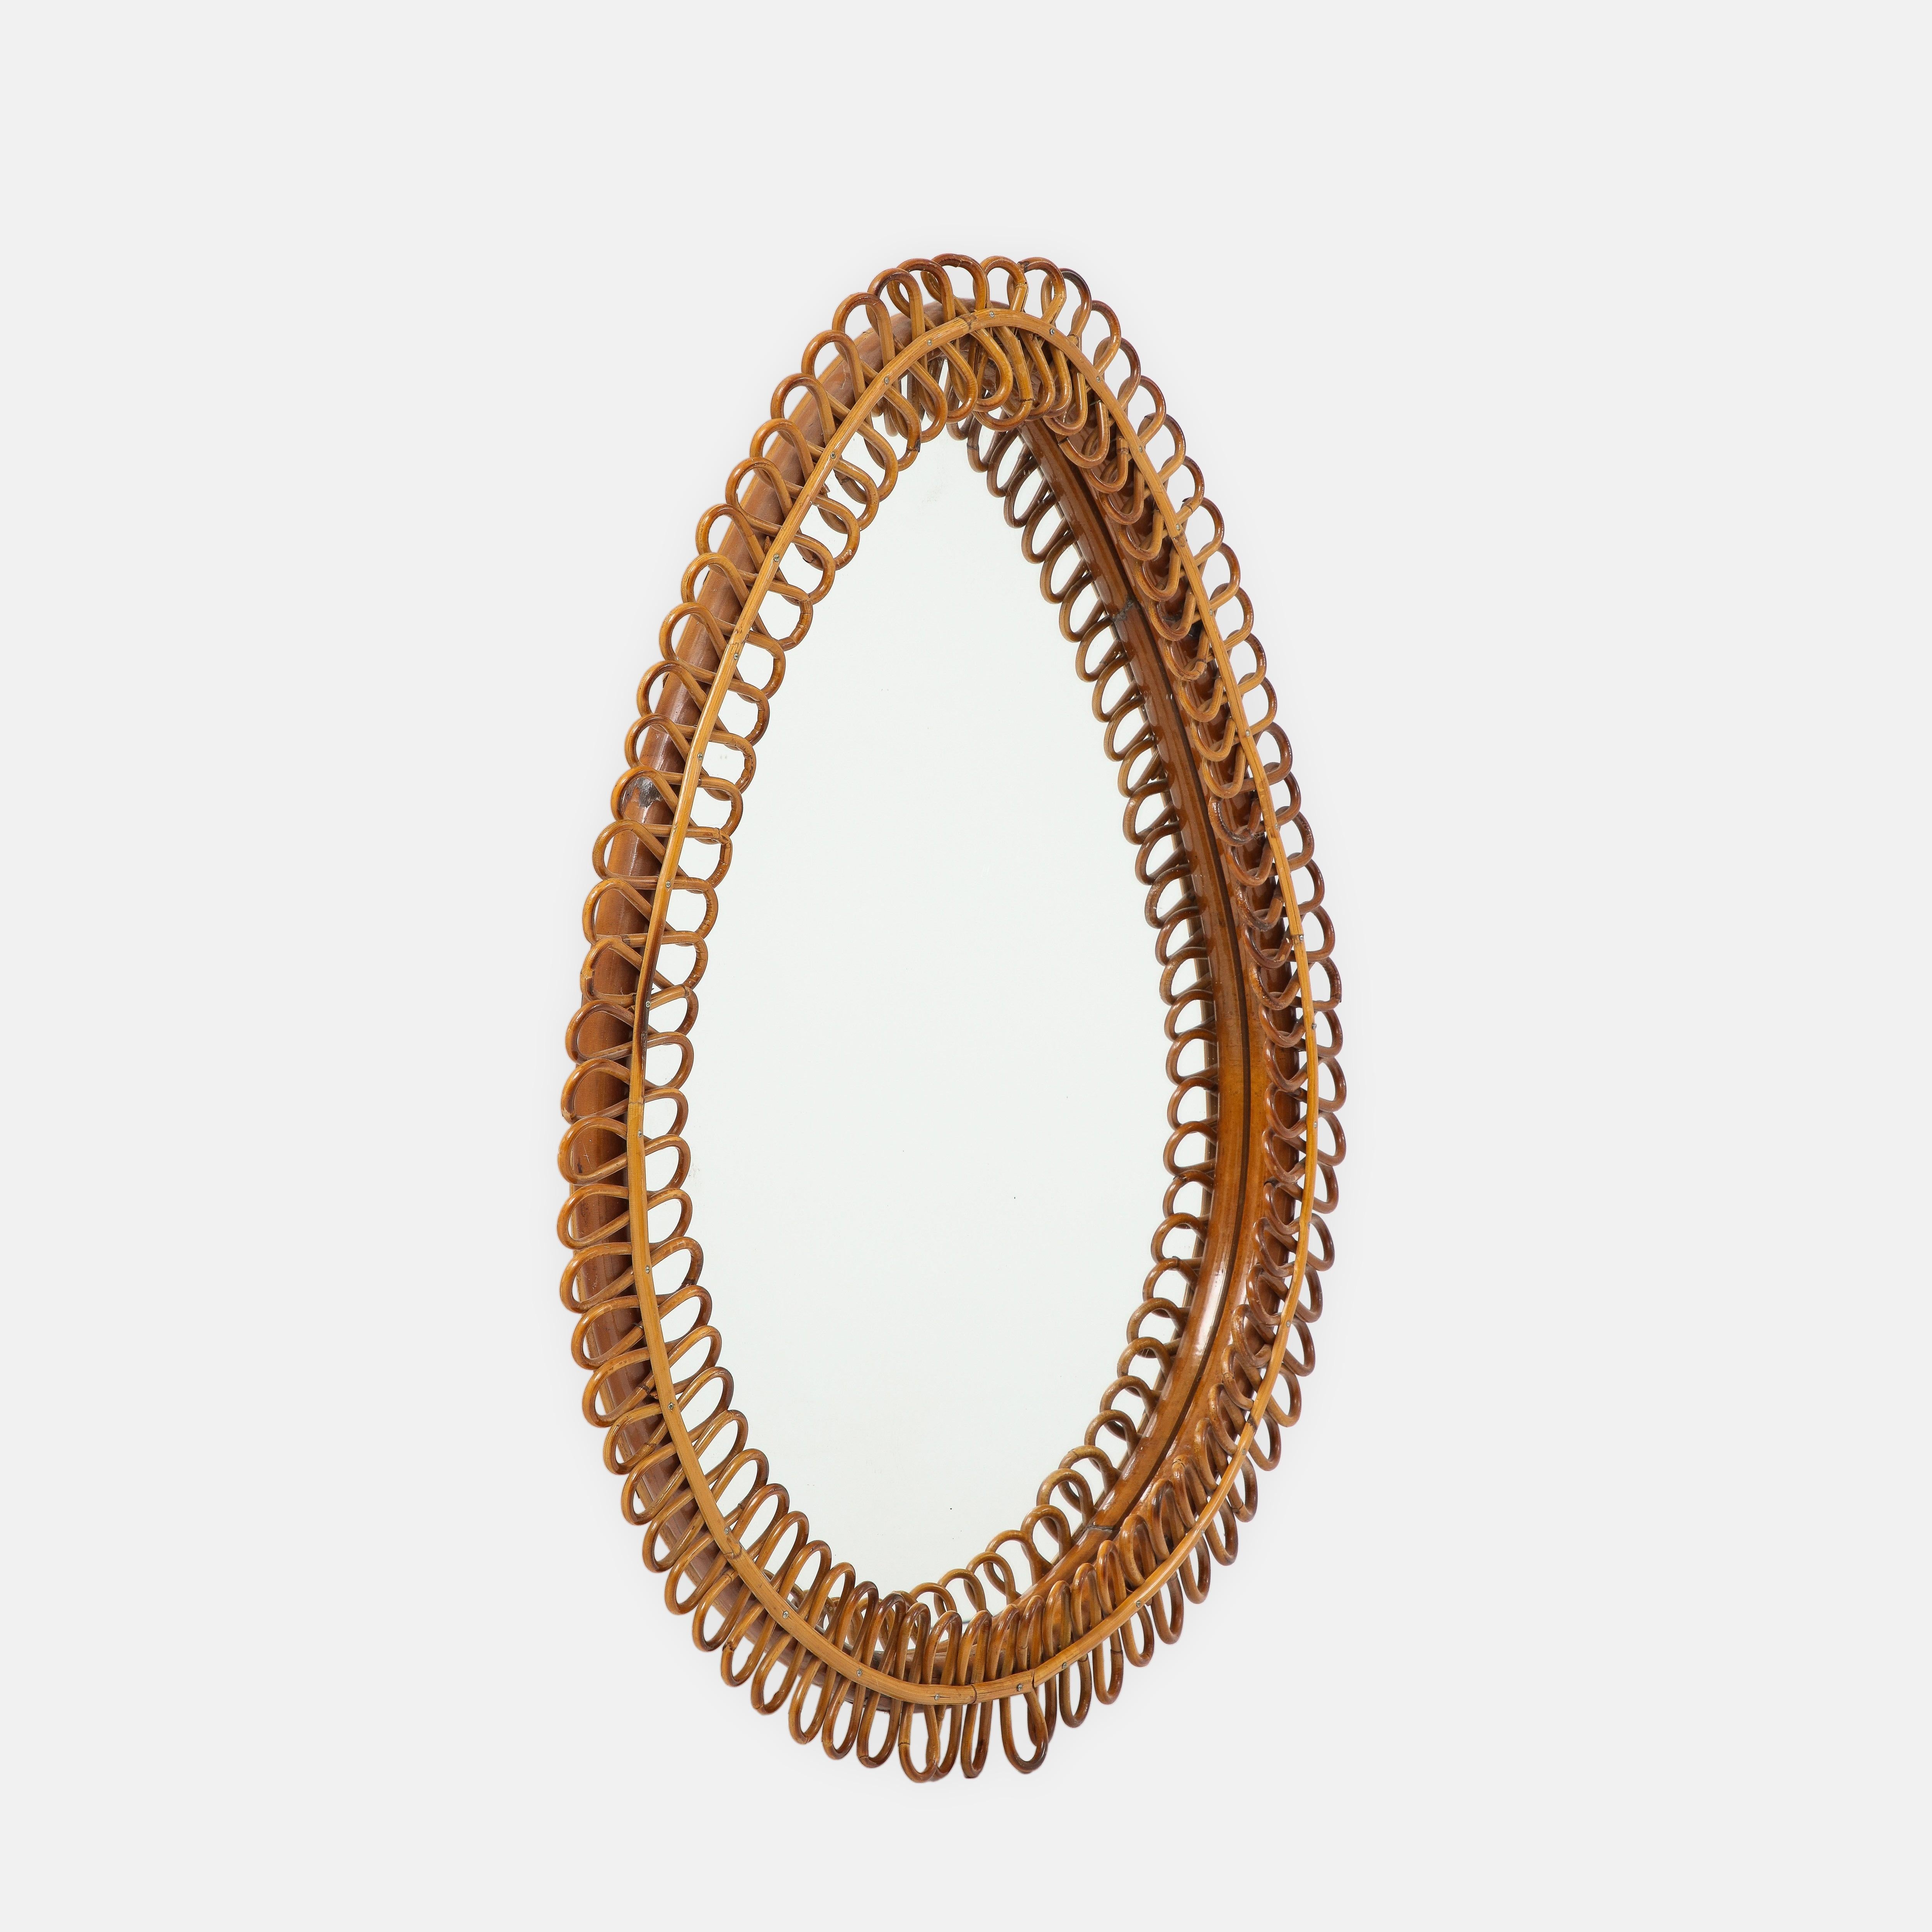 Italian 1950s mirror with hand-woven rattan frame in elegant teardrop shape.
